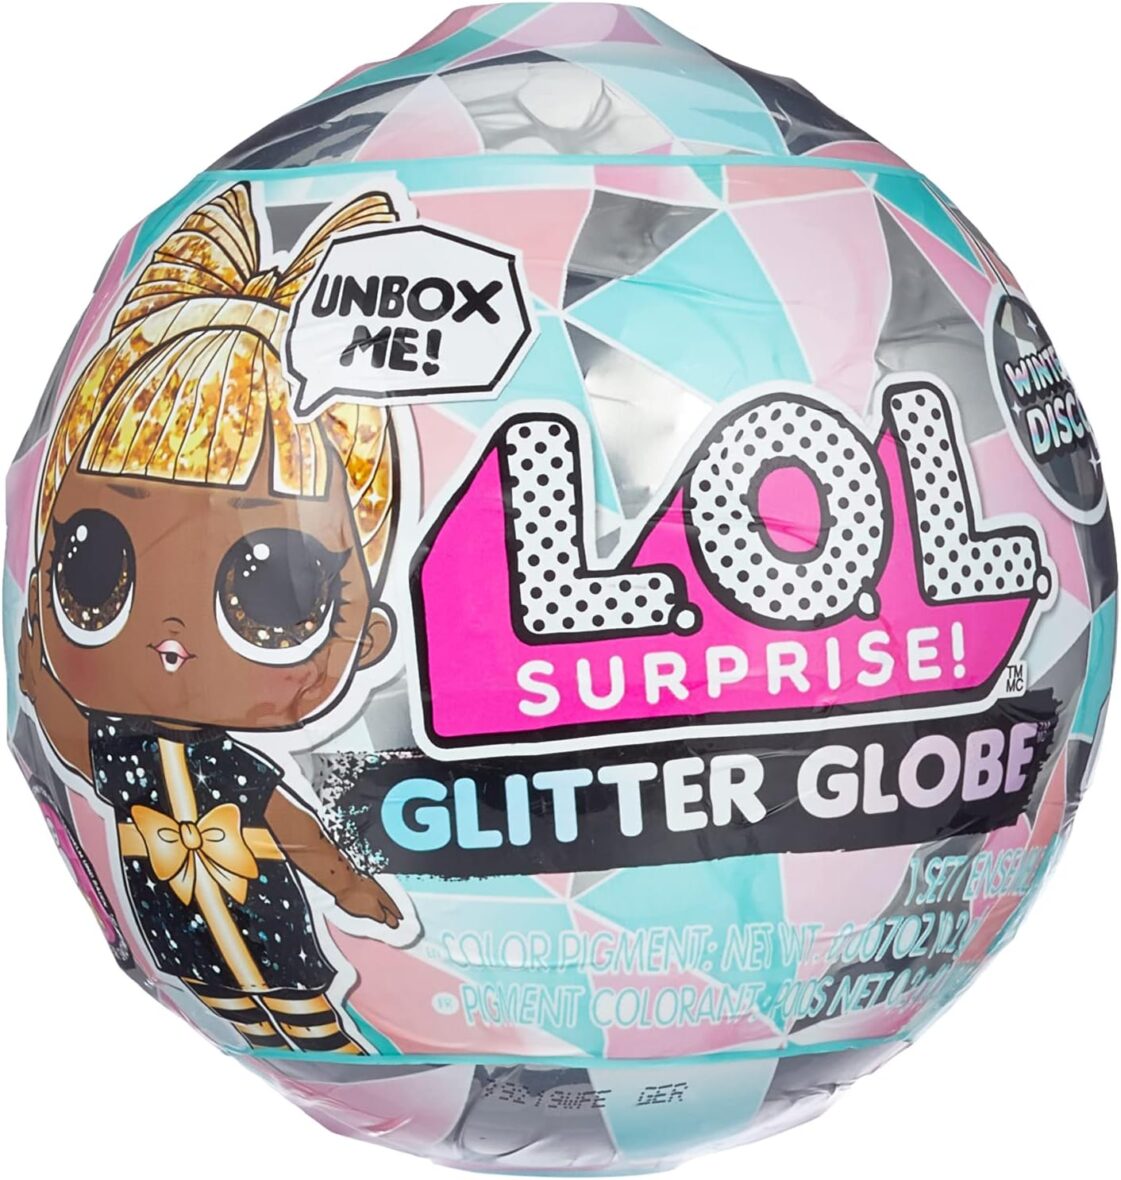 L.O.L. Surprise! Glitter Globe Doll Winter Disco Series with Glitter Hair